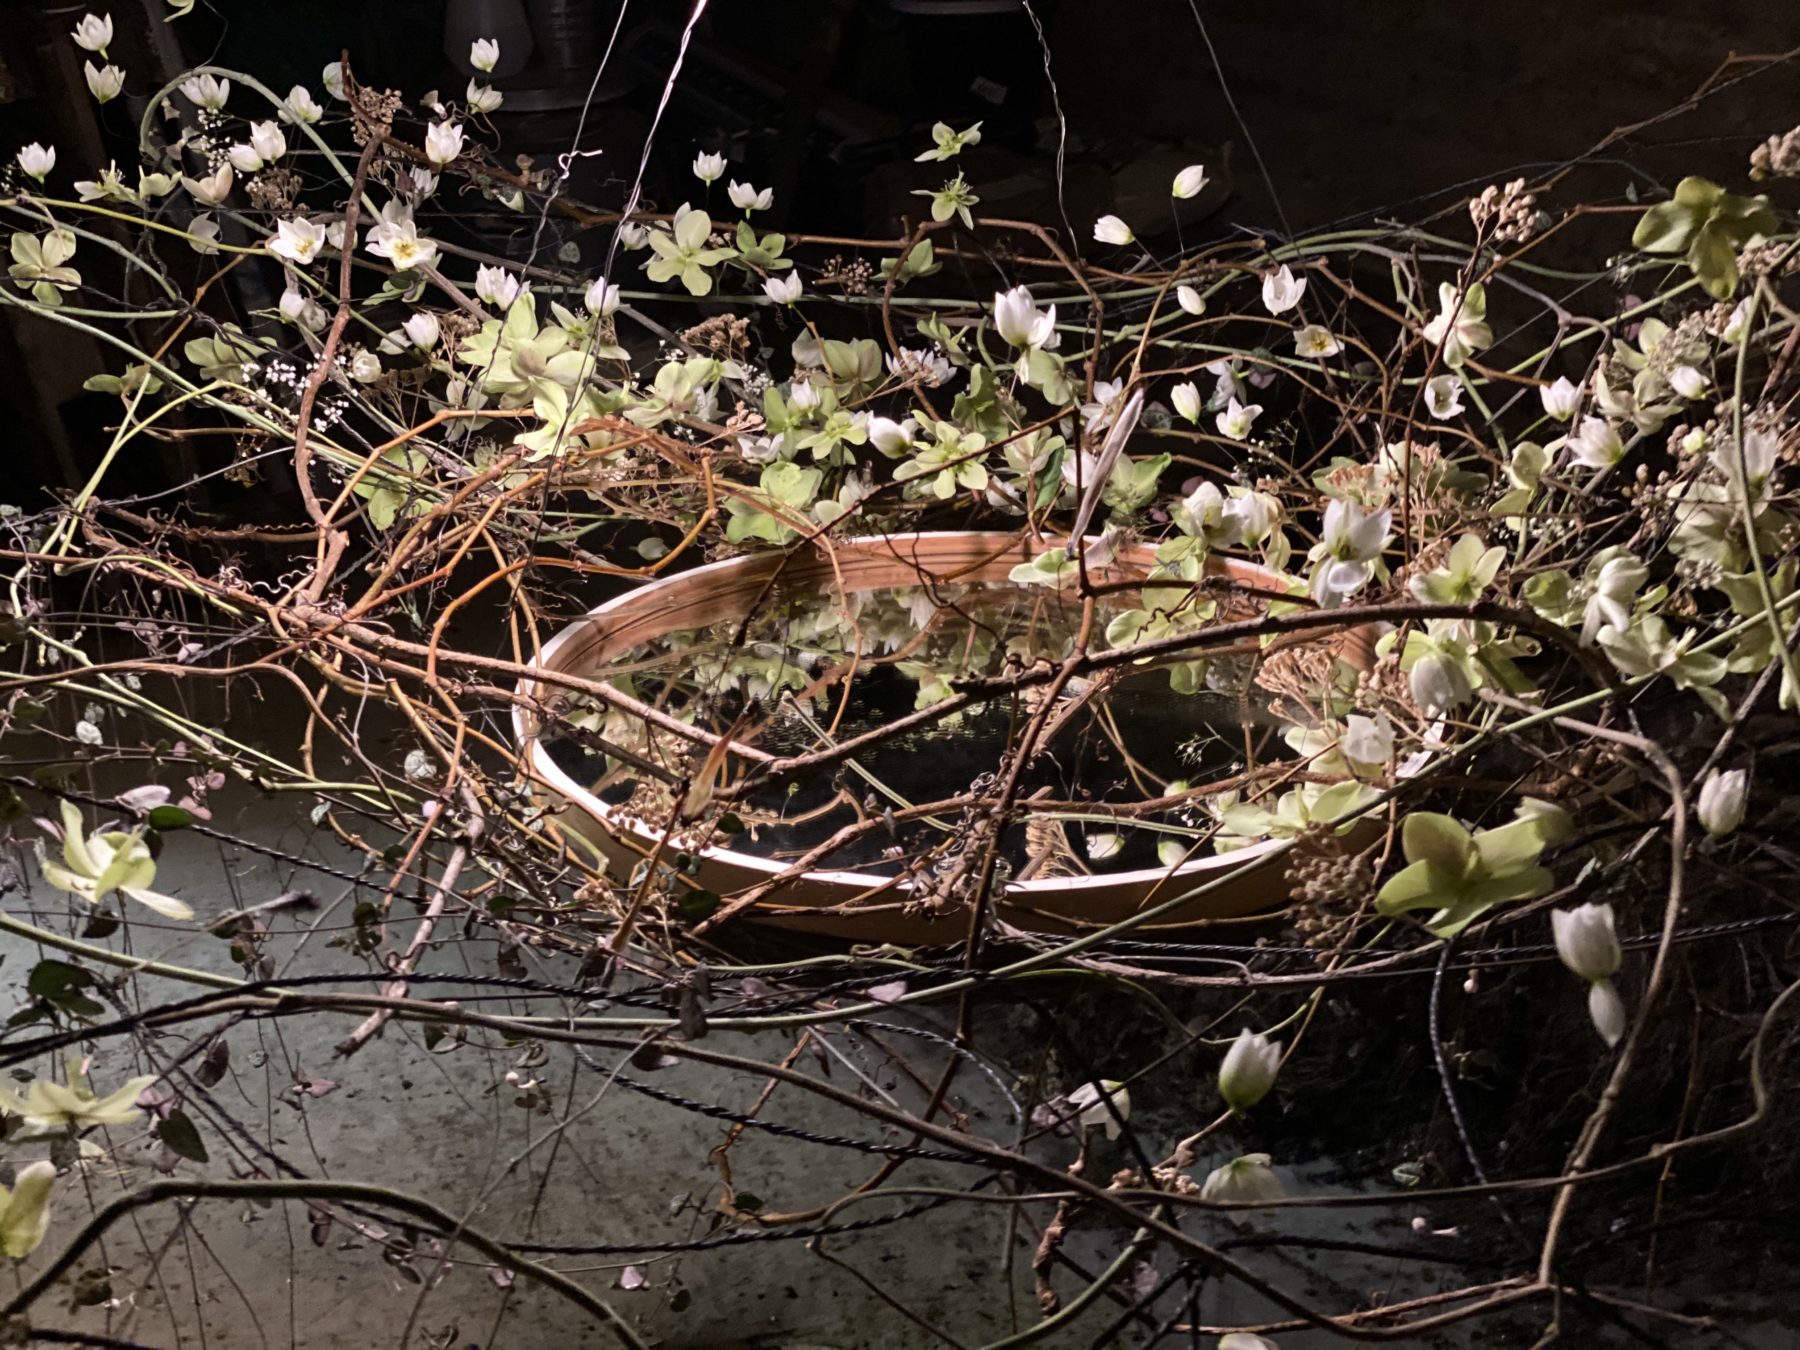 Arrangement med greiner og blomster i et svevende uttrykk